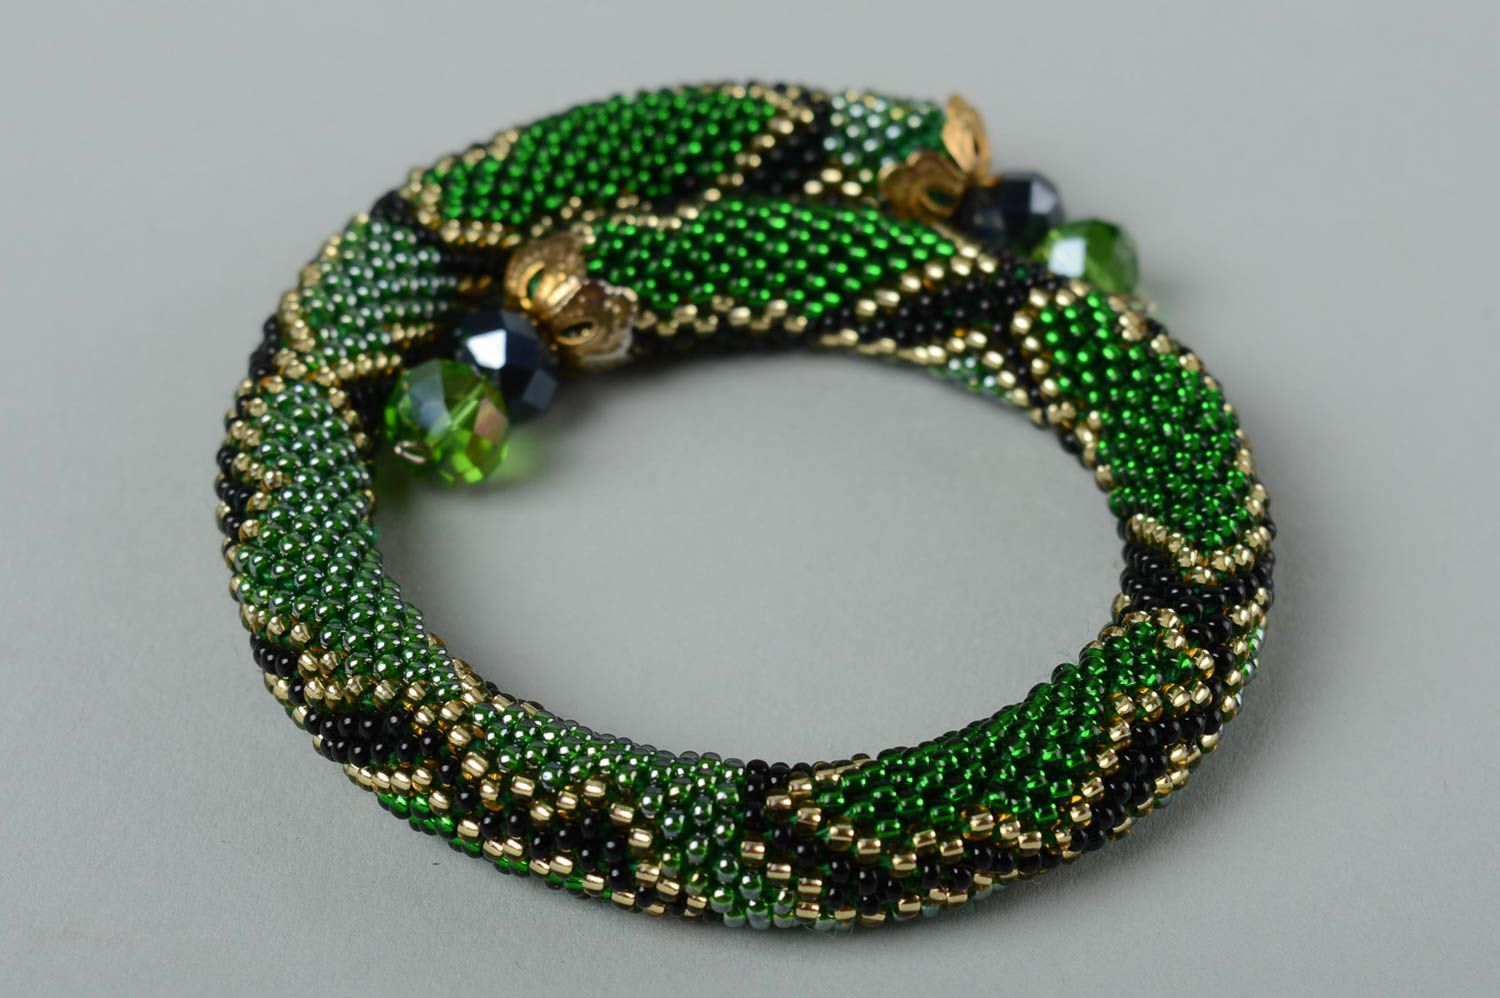 Unusual handmade beaded cord bracelet wrist bracelet designs gifts for her photo 1